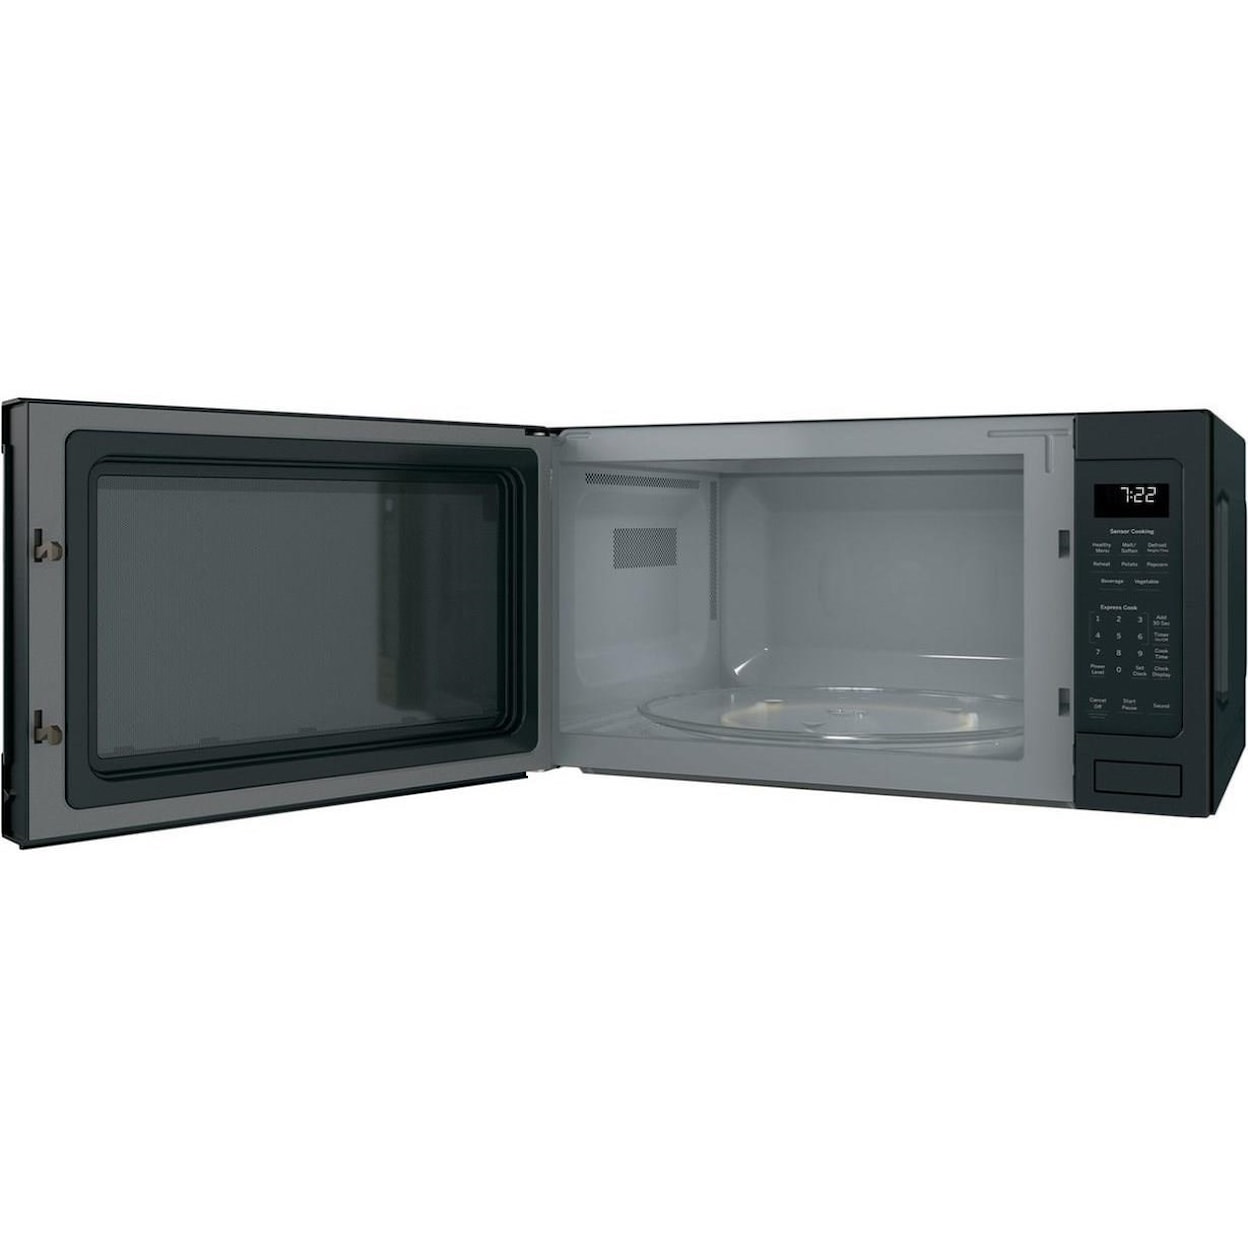 GE Appliances GE Microwaves GE Profile™ 2.2 Cu. Ft. Countertop Sensor Mi